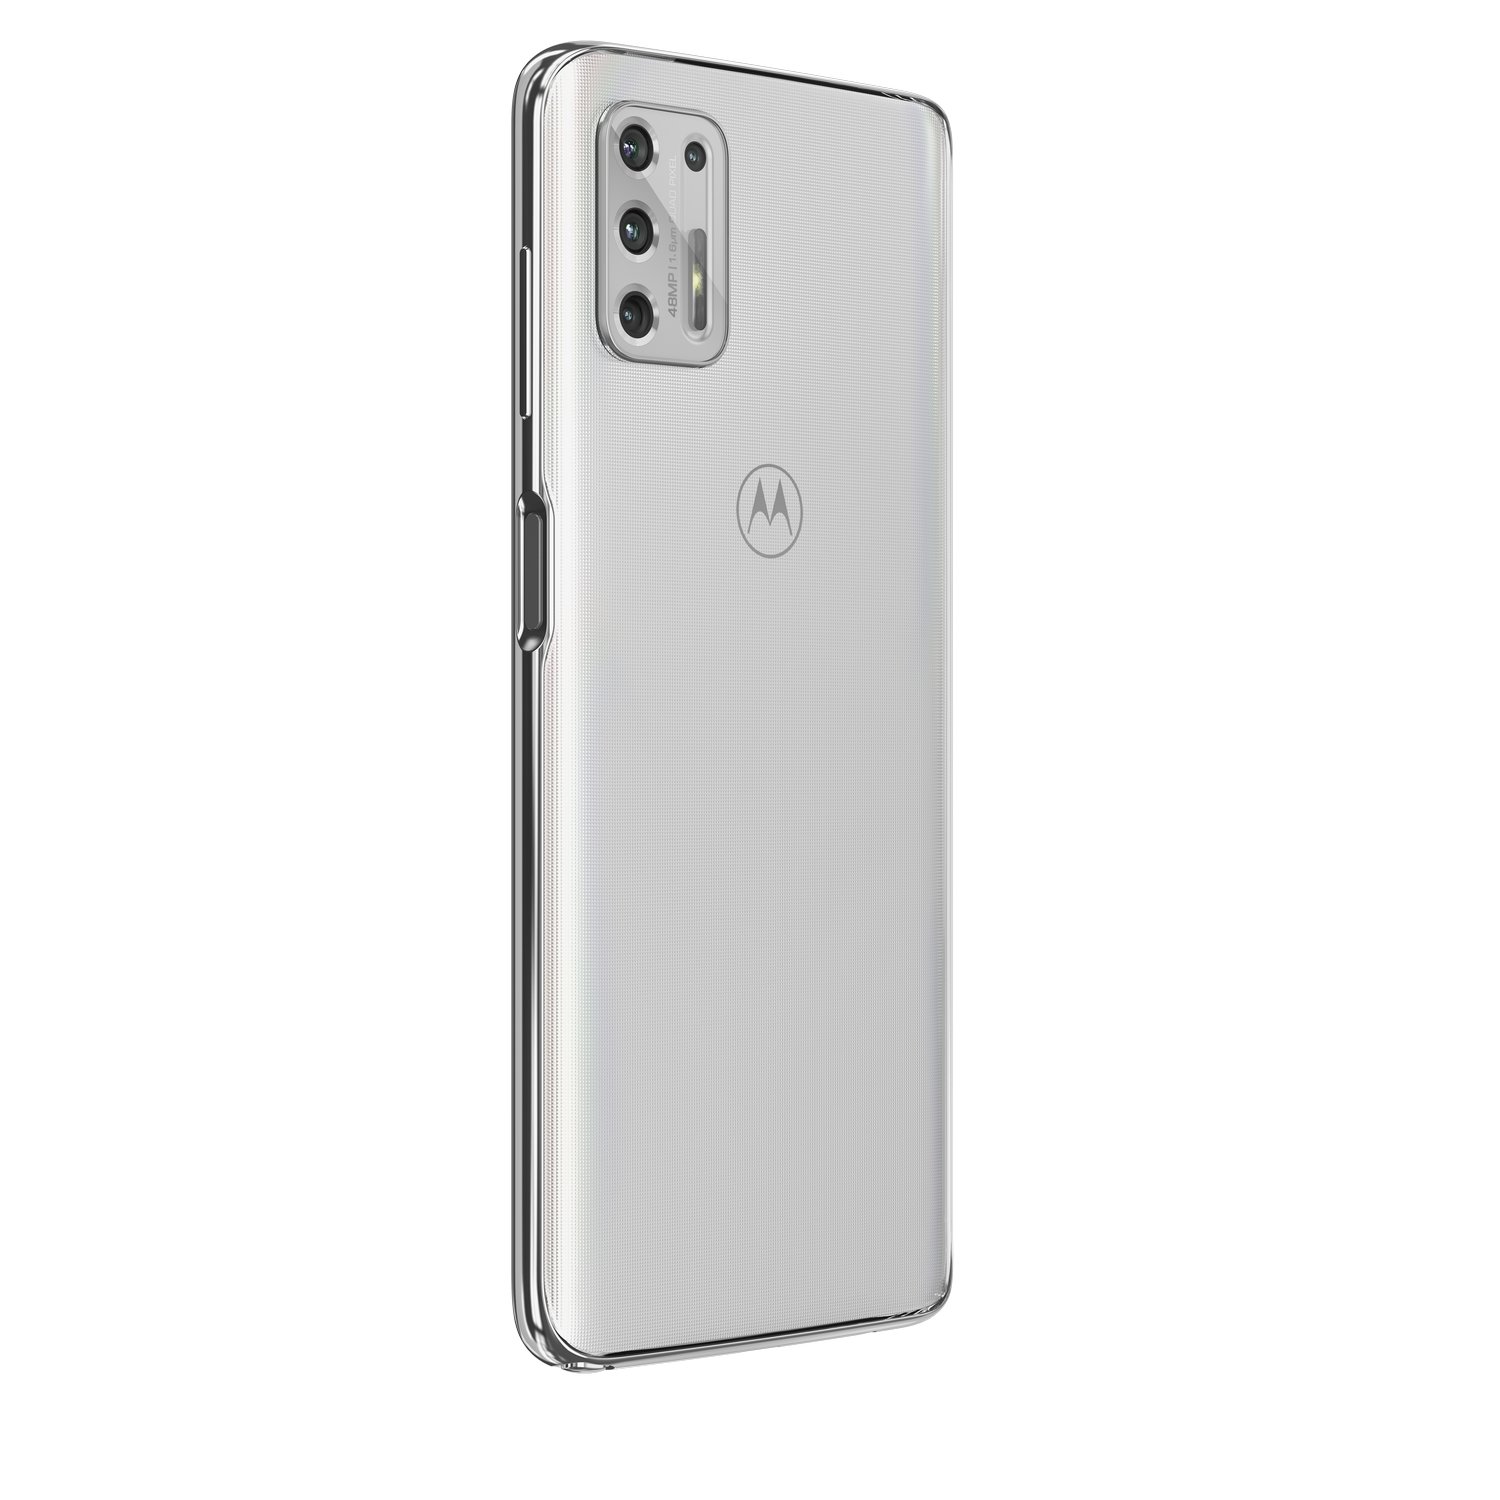 Motorola Moto G Stylus (2021) caracteristicas e